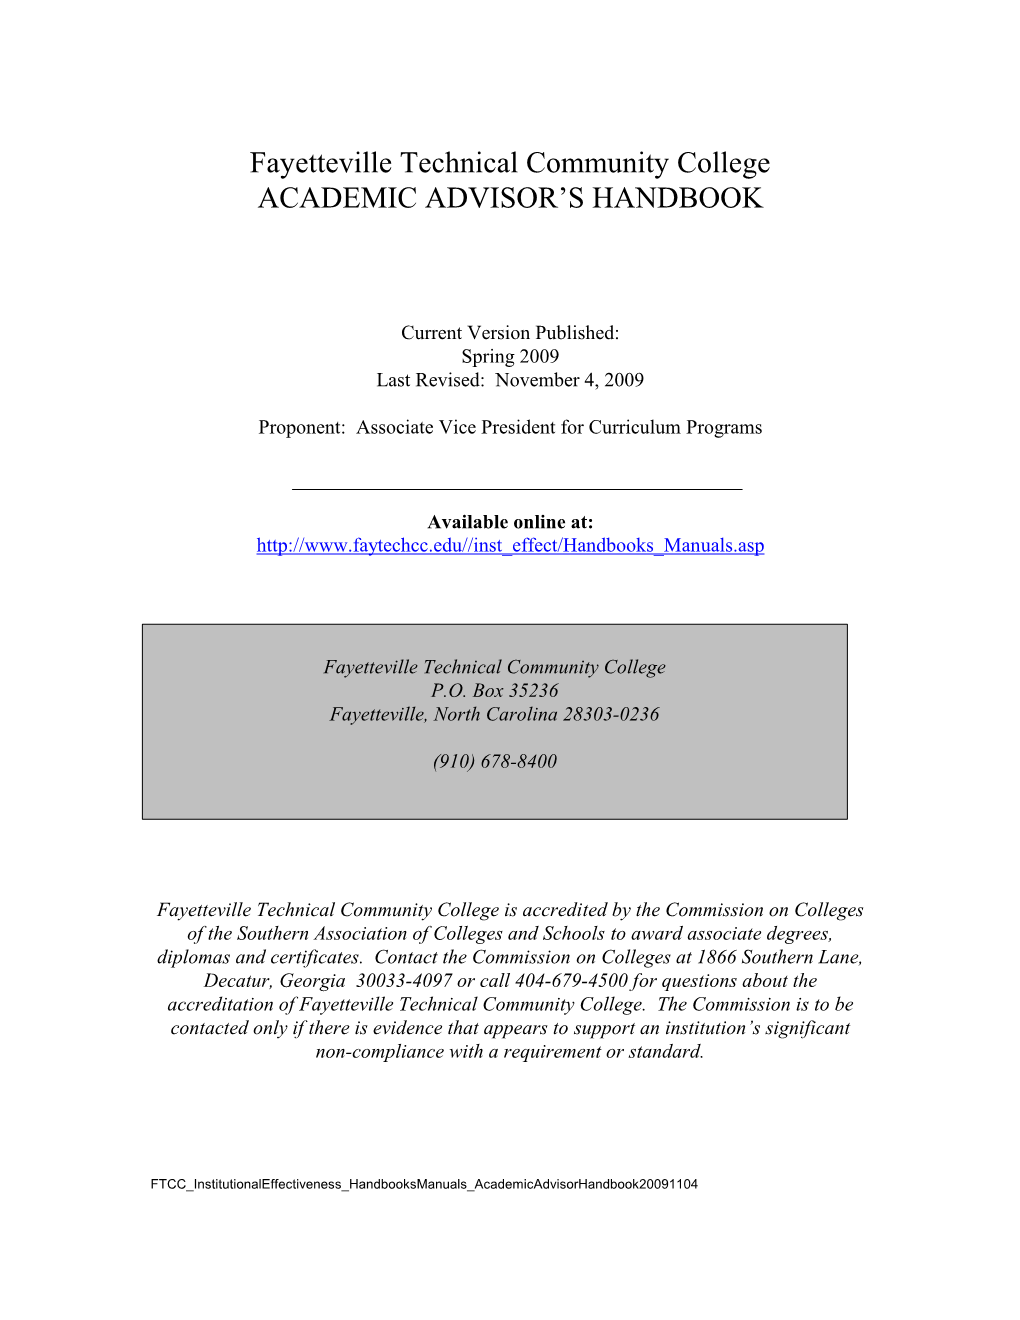 Academic Advisor's Handbook